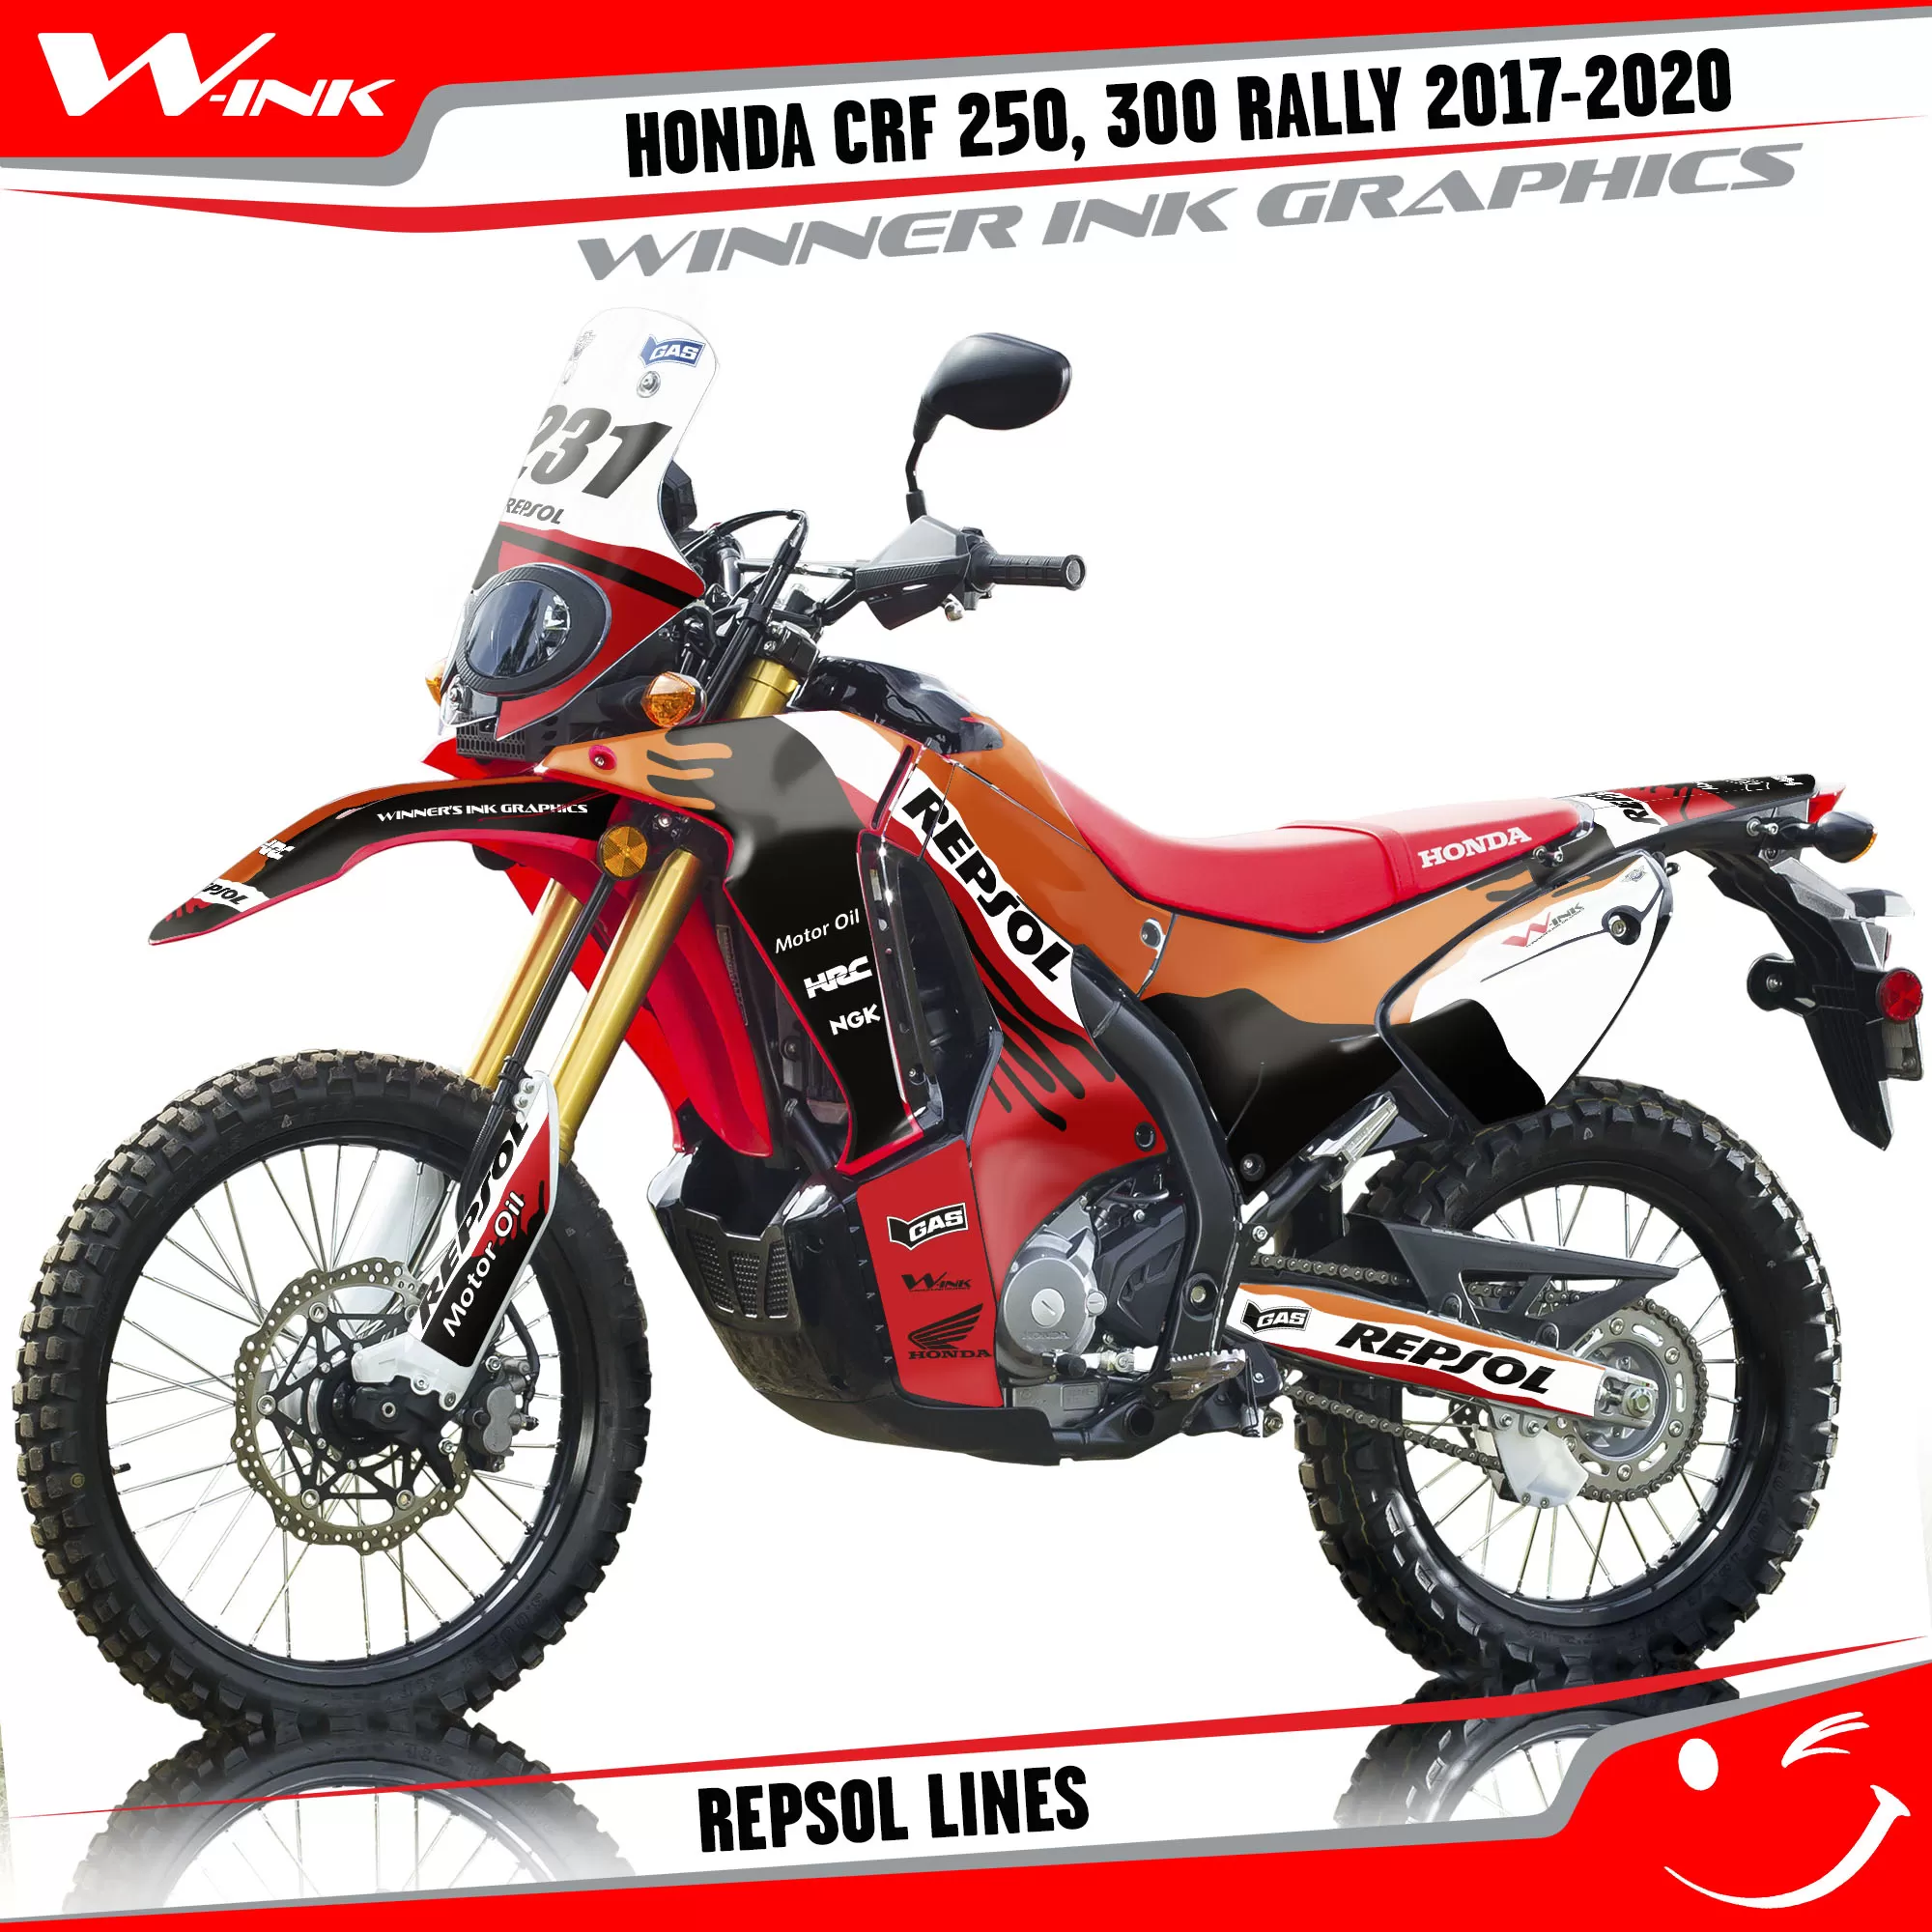 Full stickers Honda CRF 250 300 Rally 2017-2020 Repsol Lines